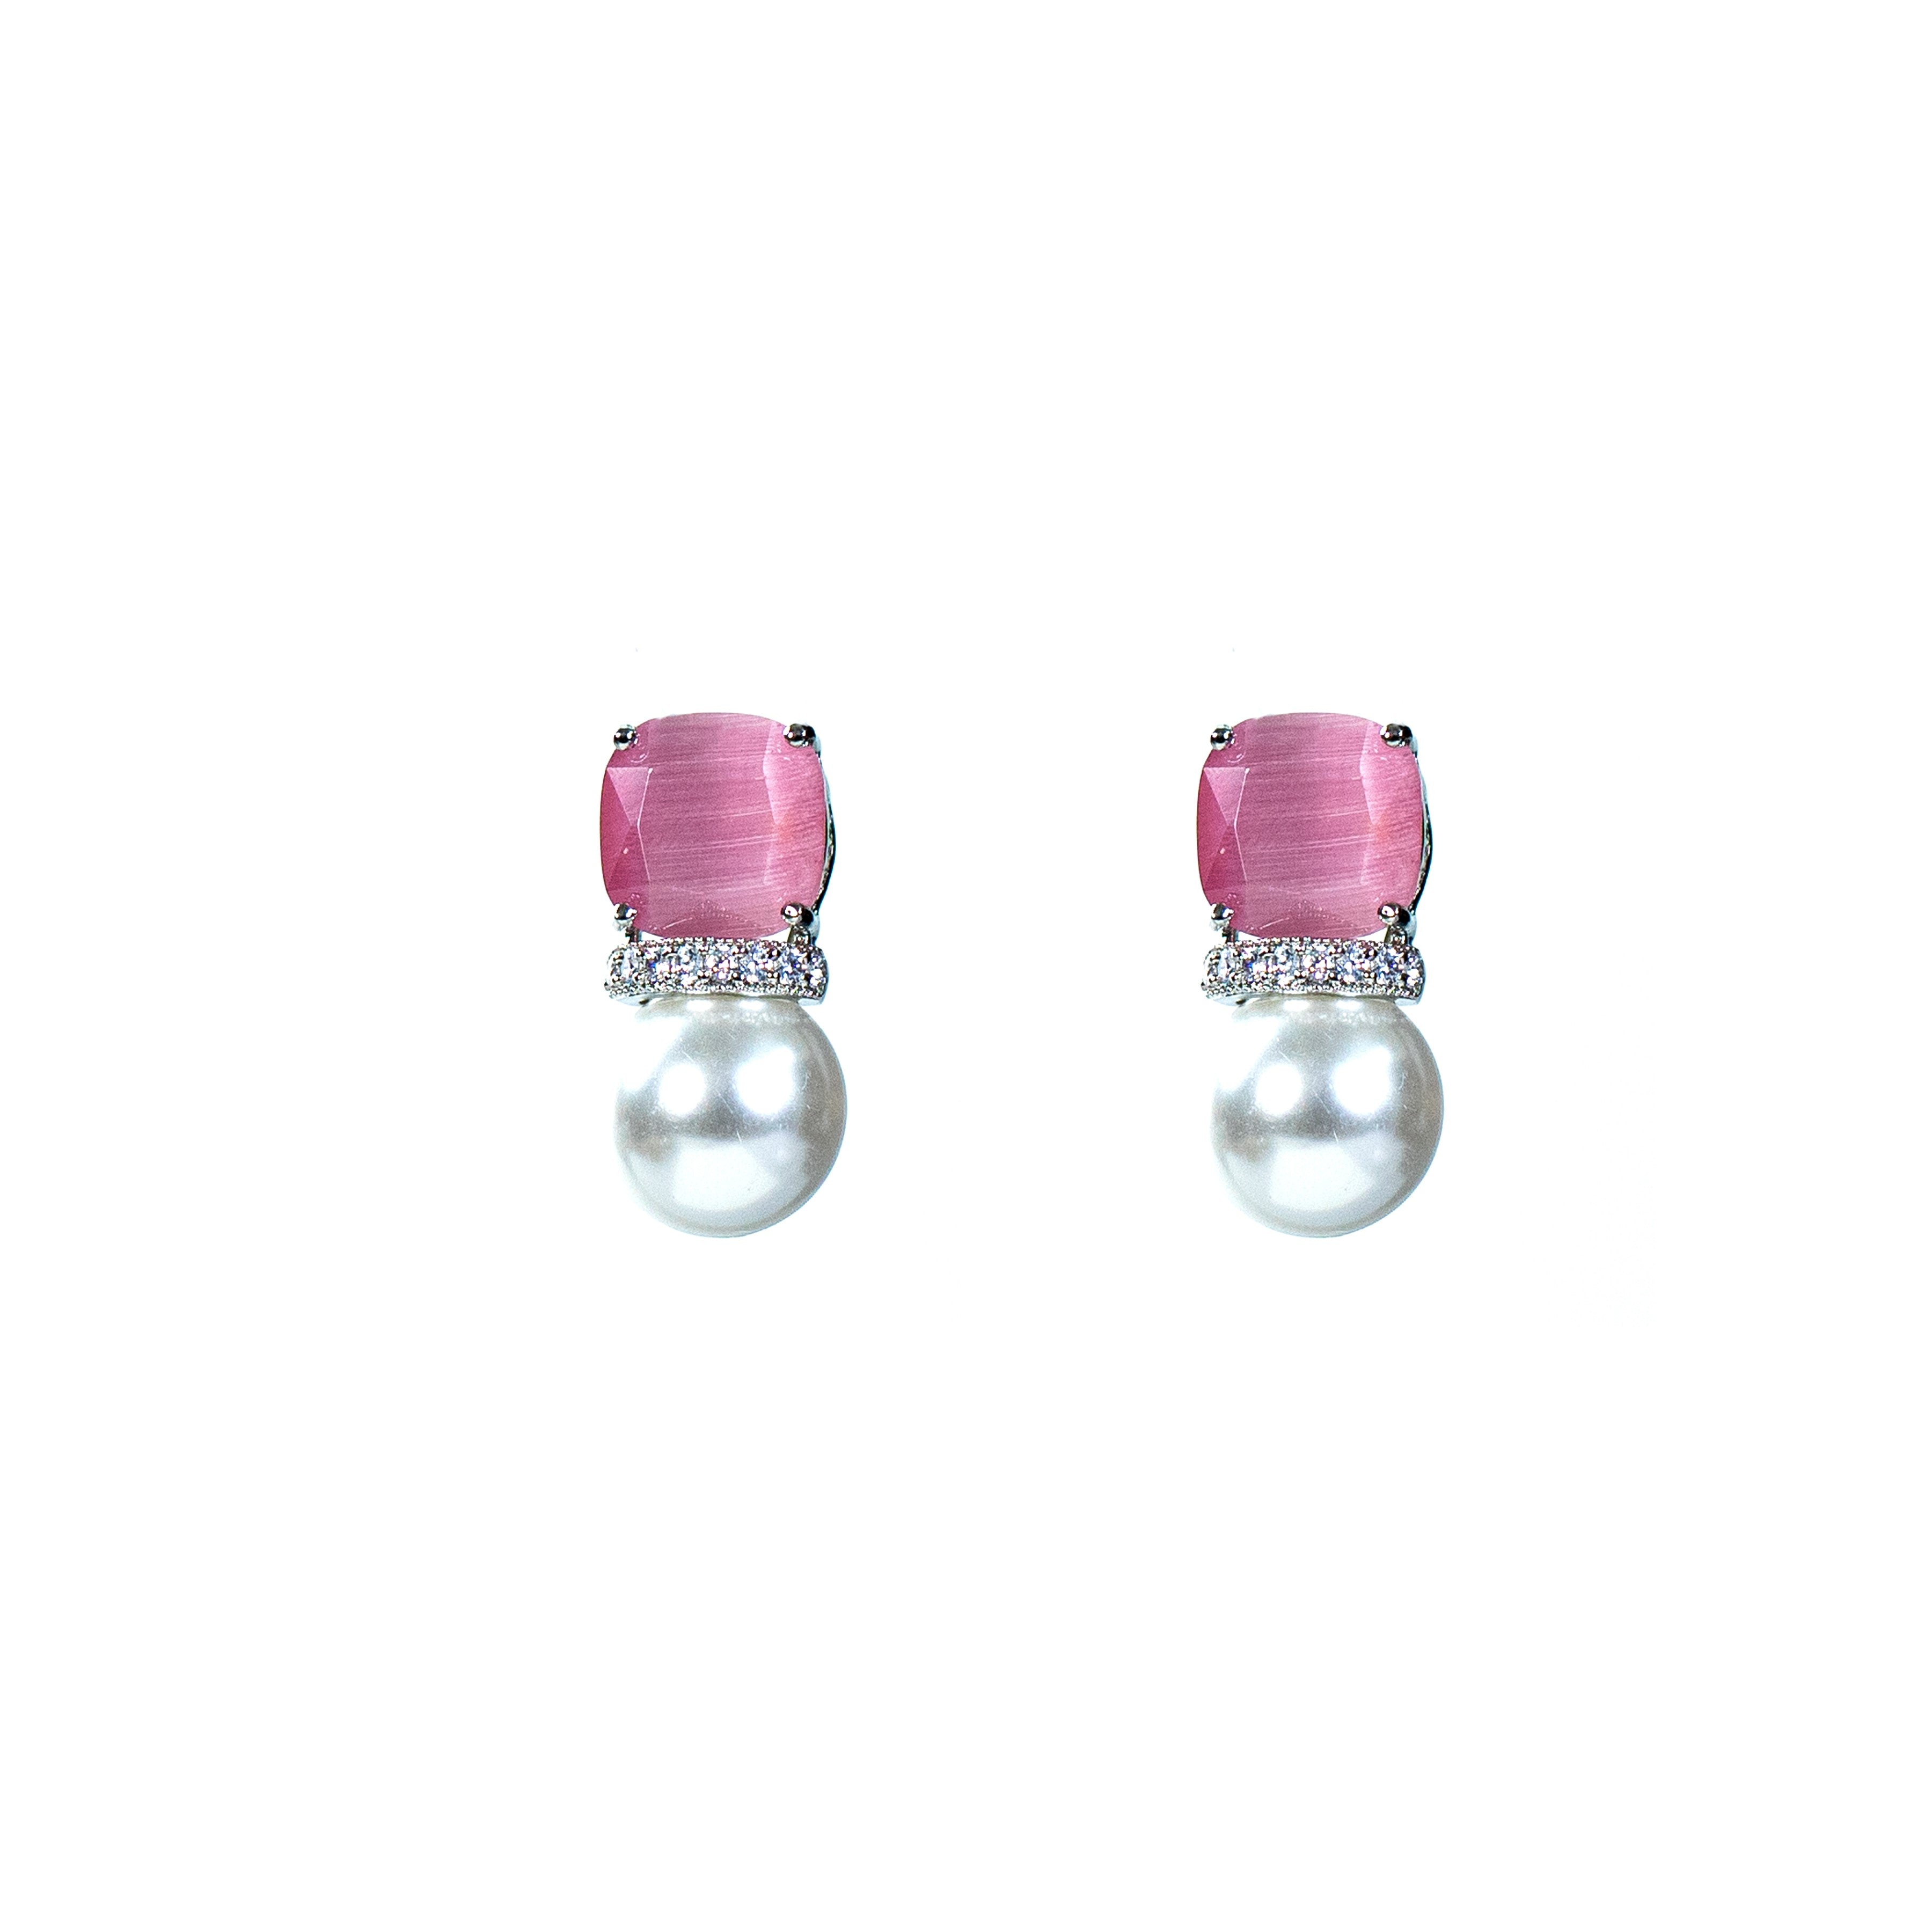 Karen Suen Fine Jewellery on Instagram Brilliant pair of conch pearl and diamond  earrings from Perfect Pearl collection   KarenSuen  KarenSuenFineJewellery Designer BespokeJewels PreciousStones  FineJewelry JewelleryDesigner 